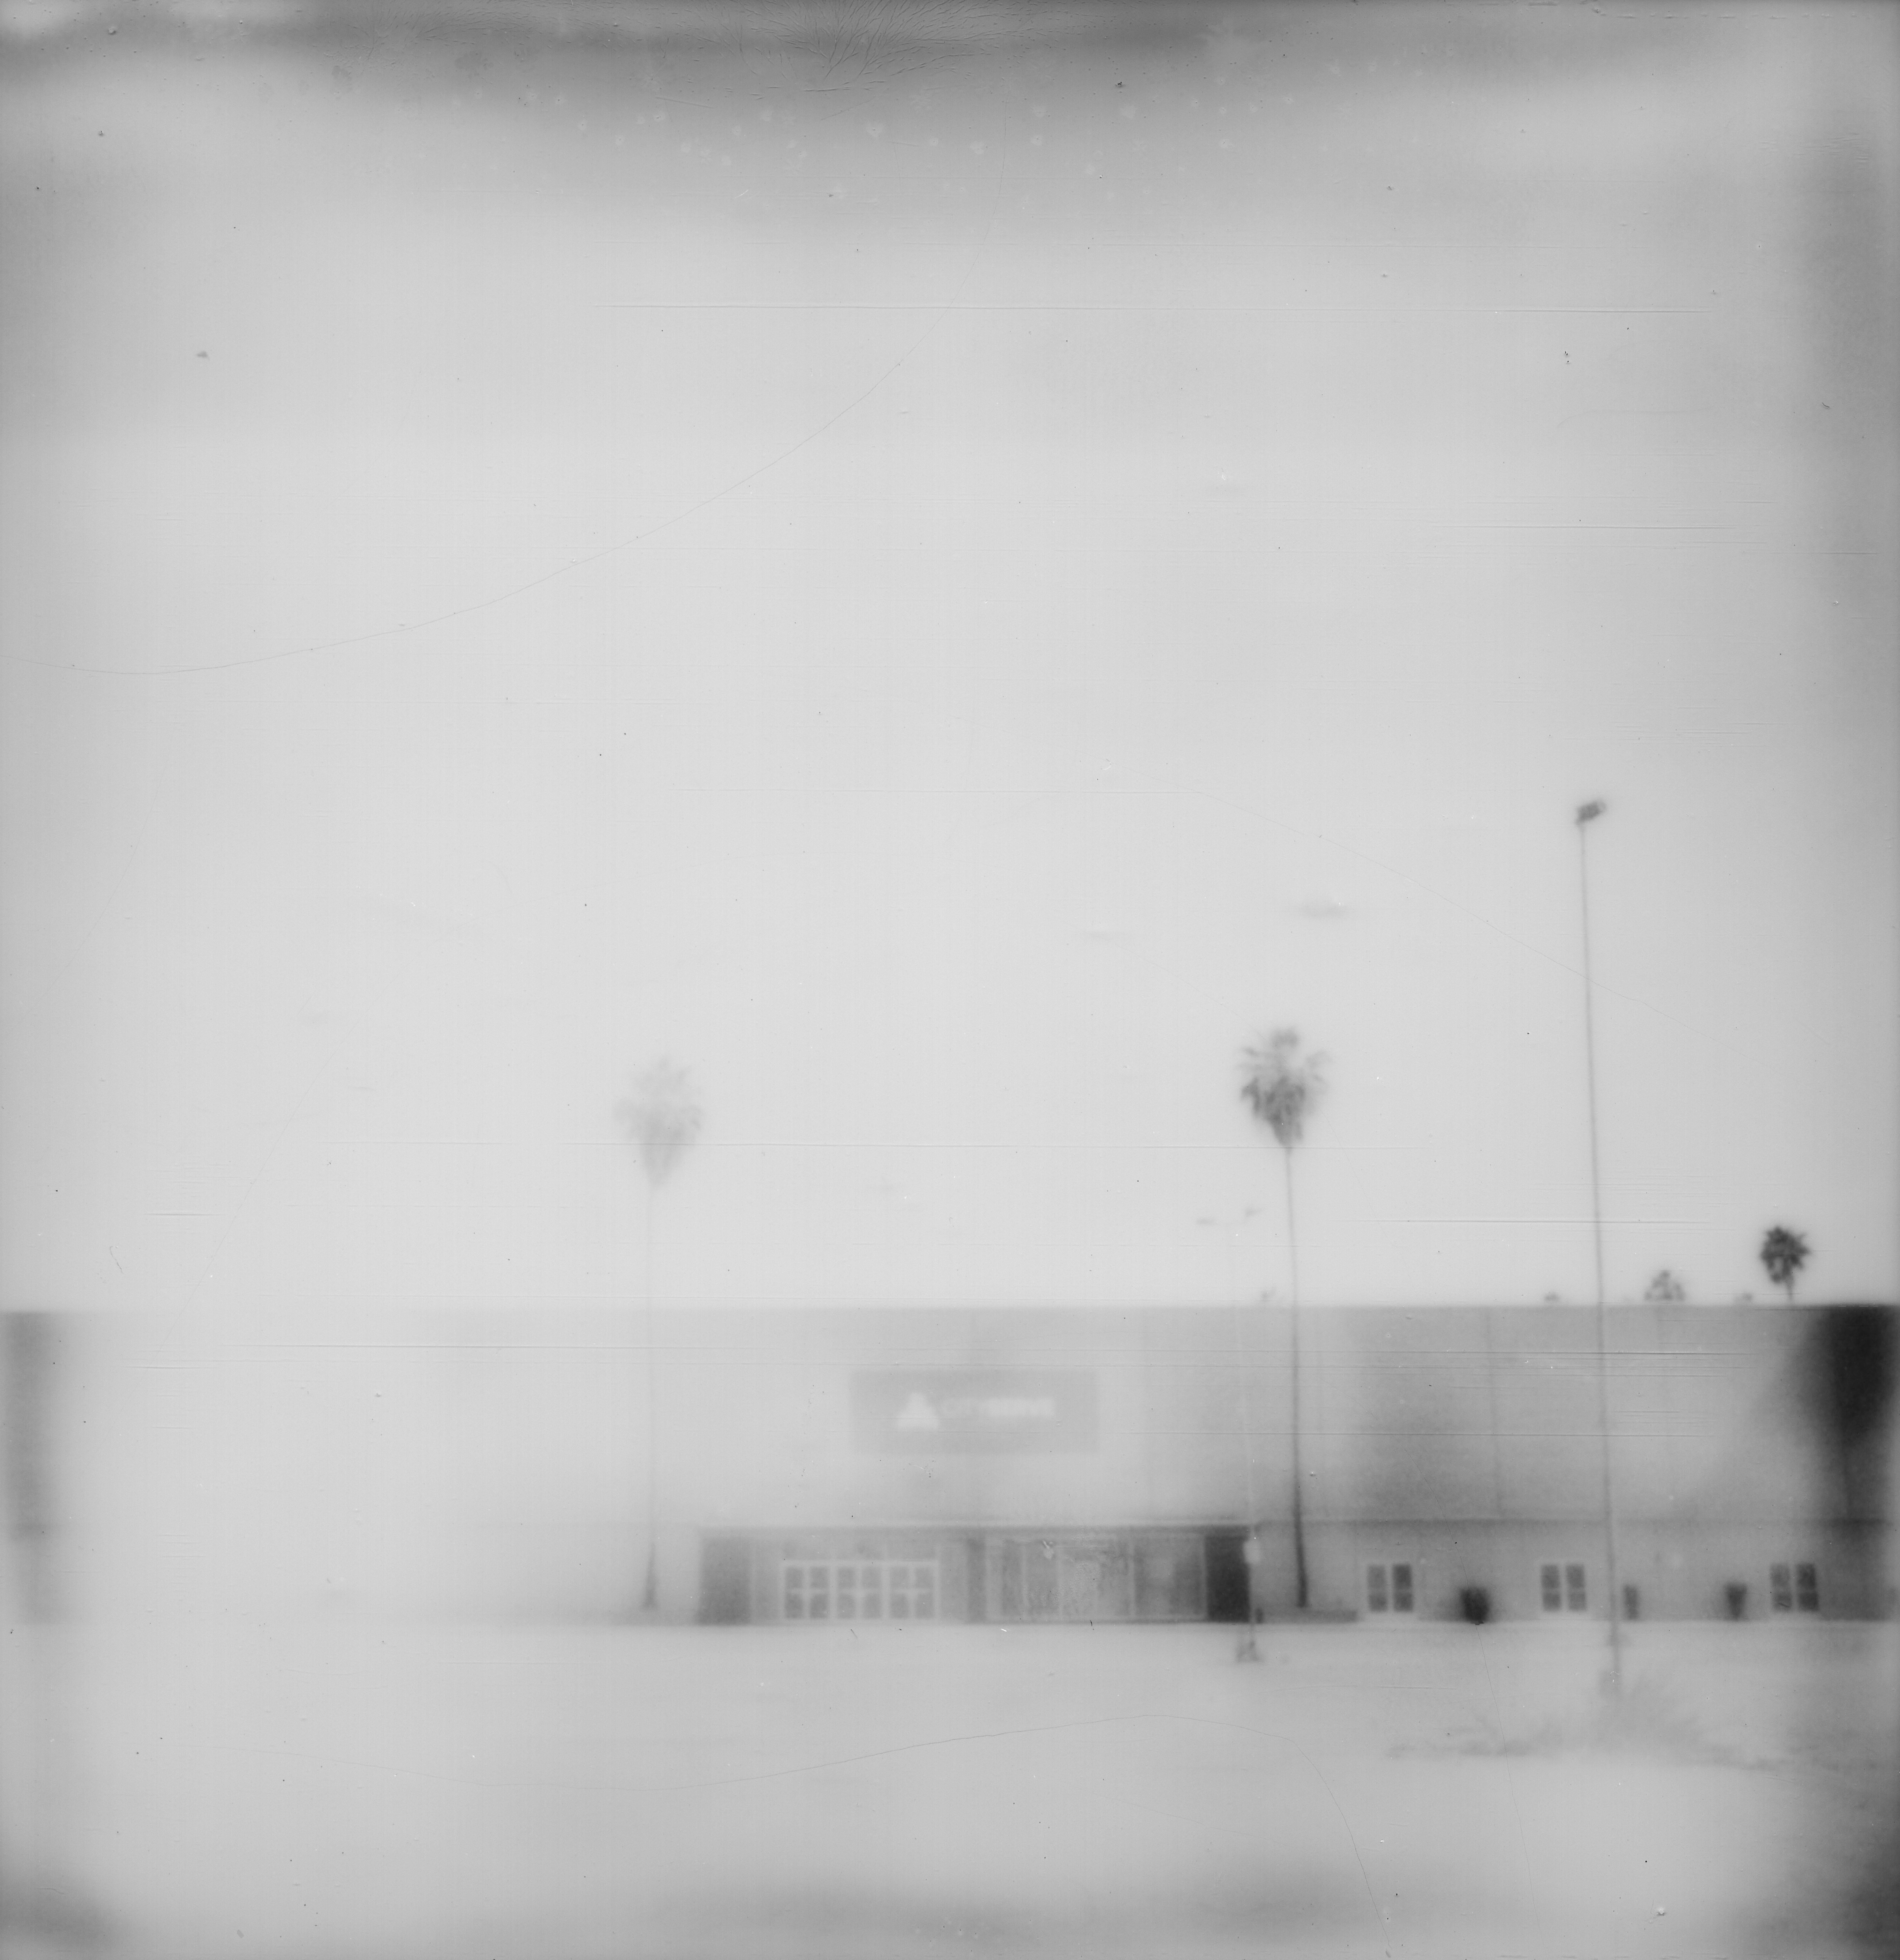 Serve (Pologne fantôme) - 21e siècle, Polaroid, paysage